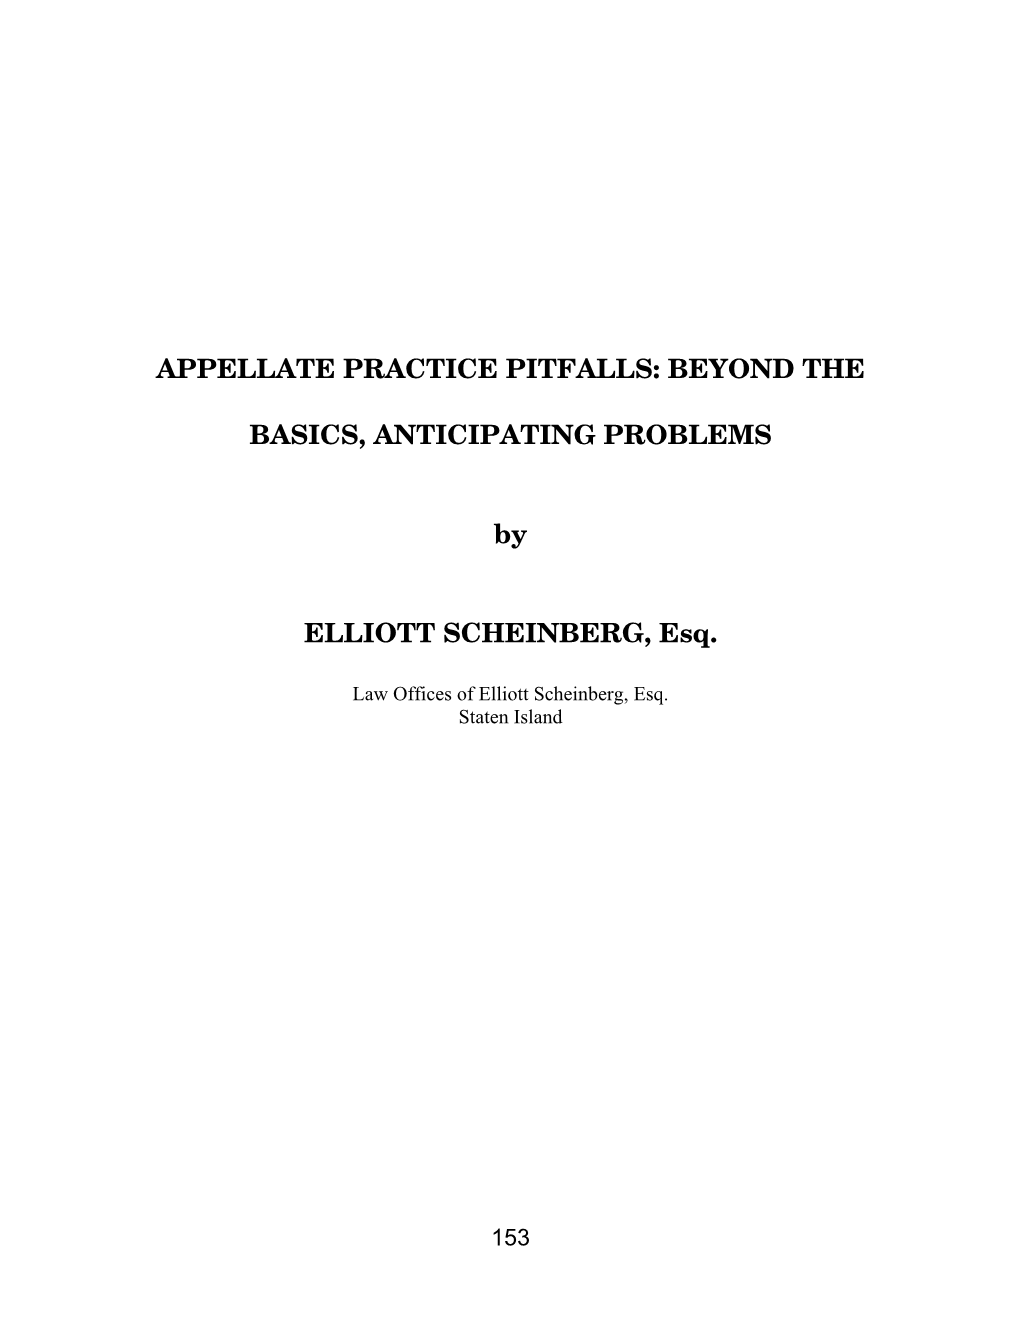 Appellate Practice Pitfalls: Beyond the Basics